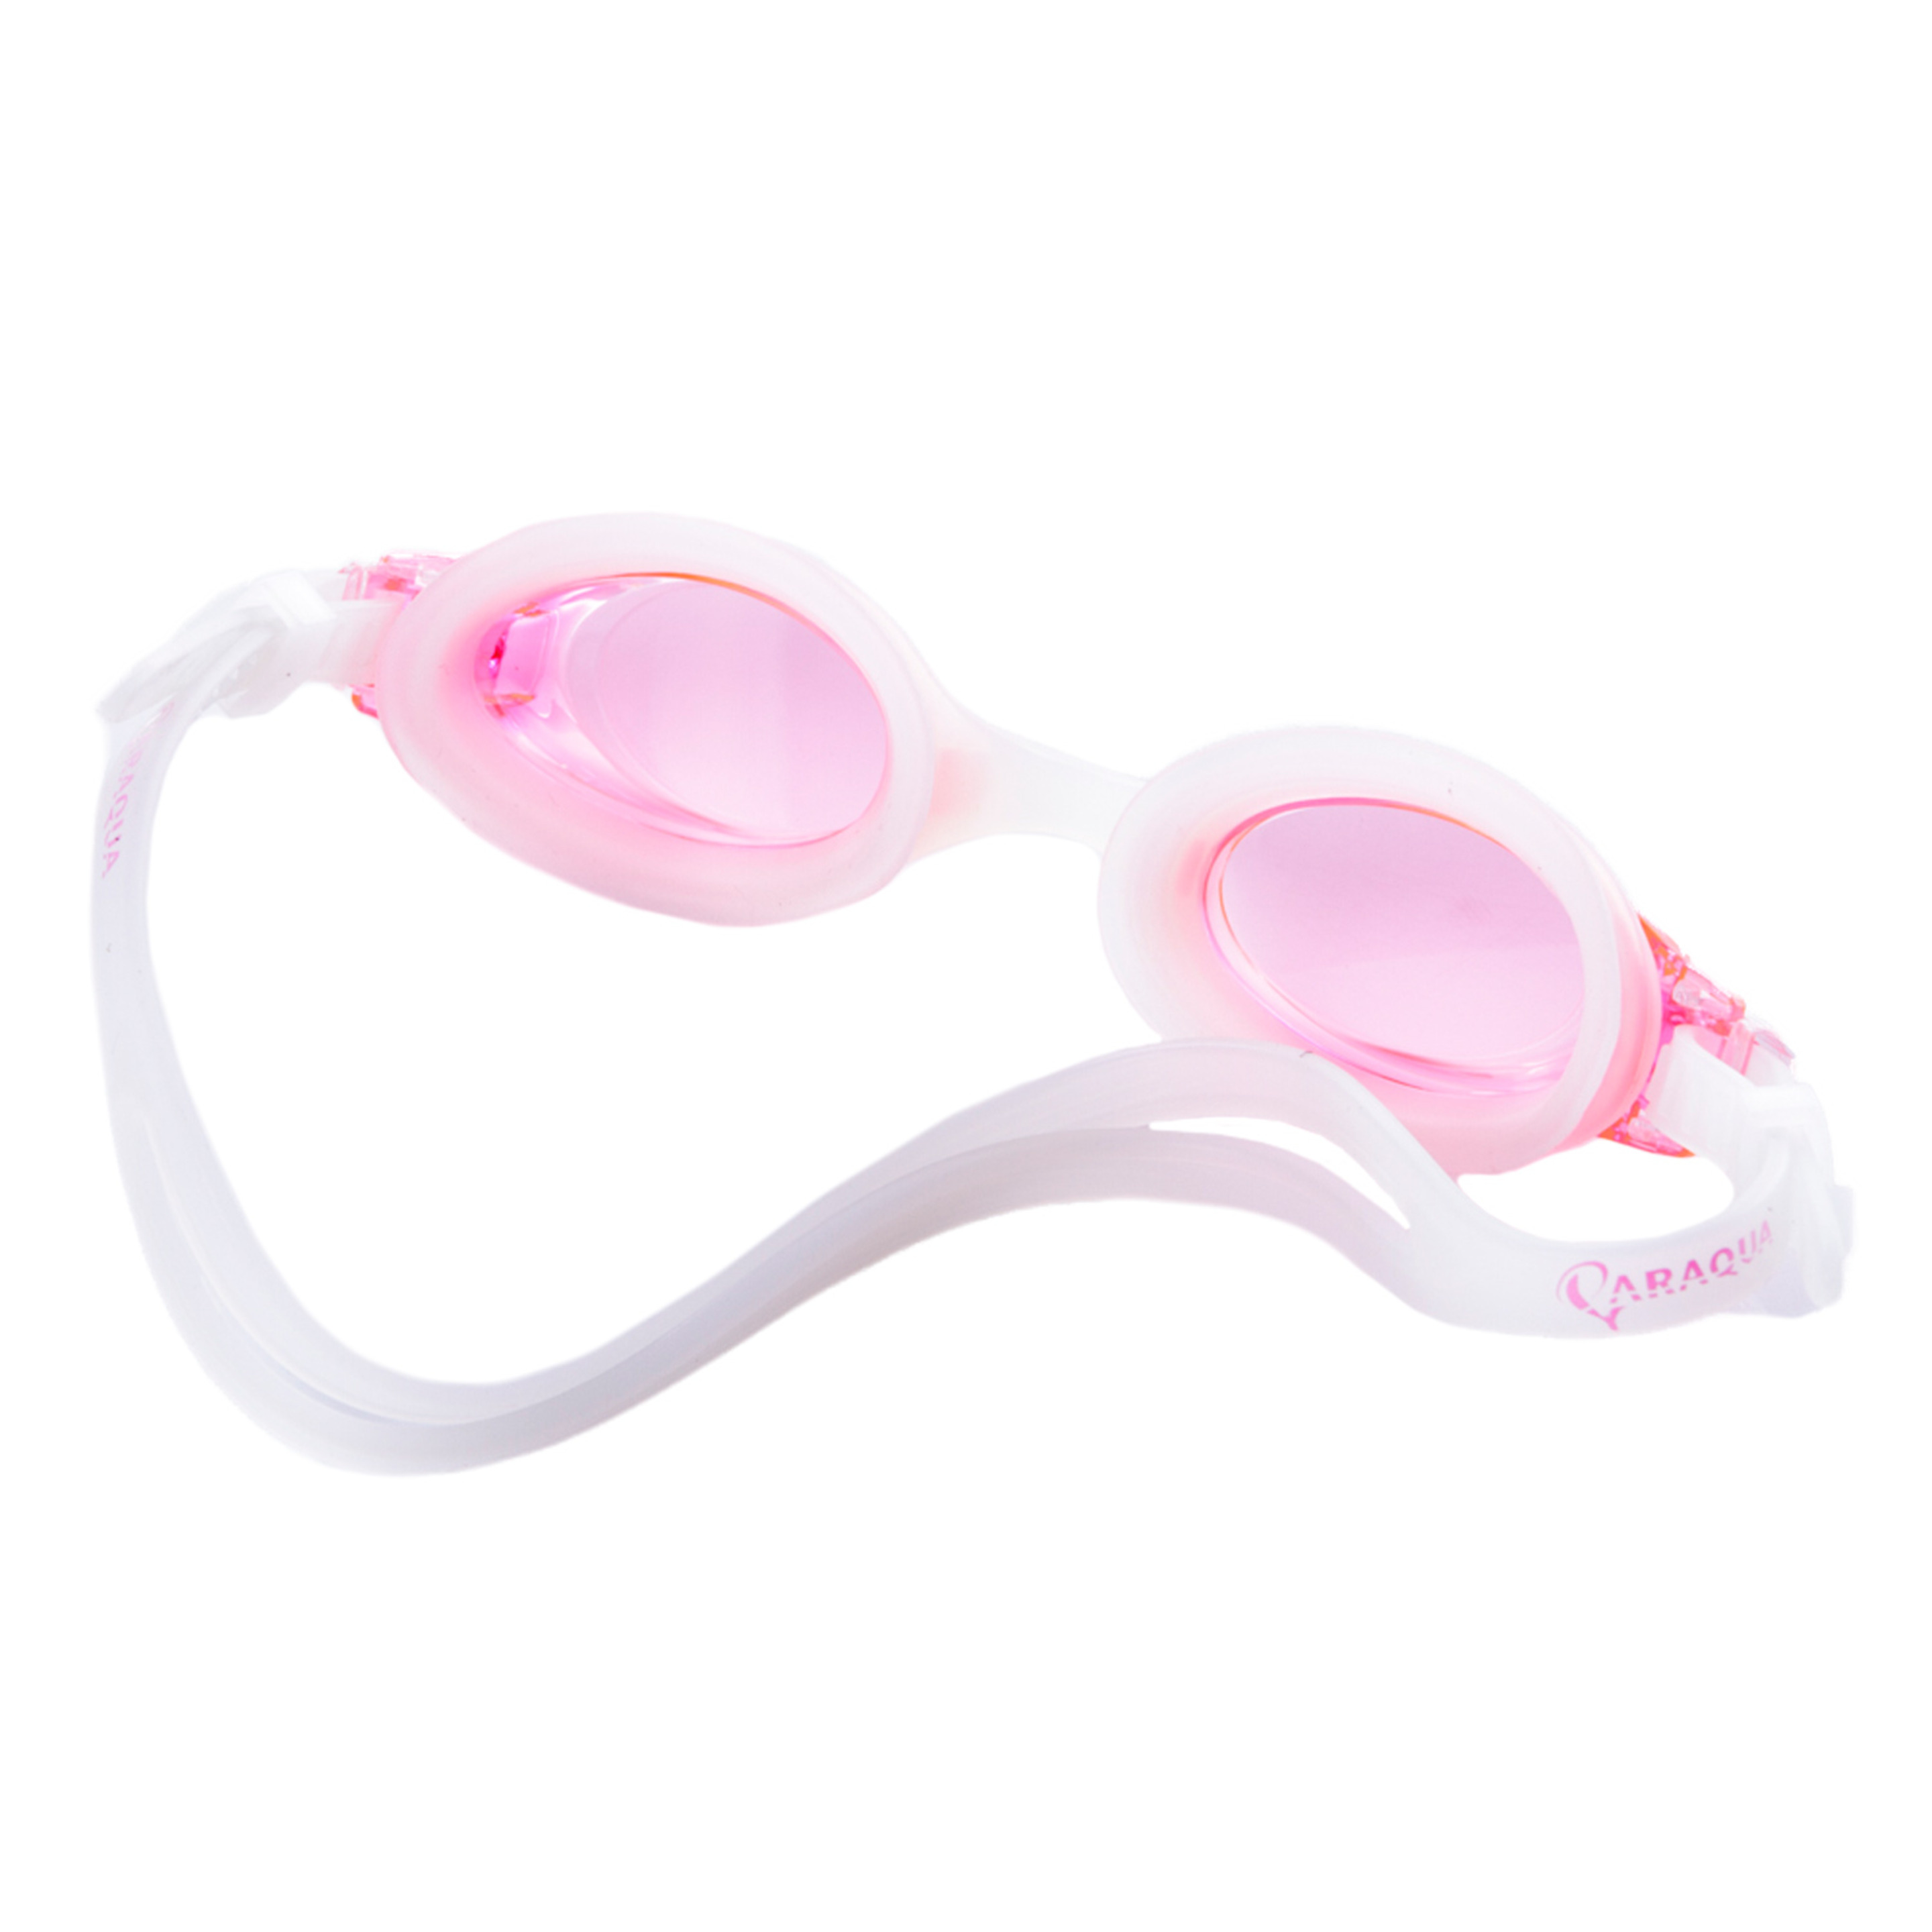 Gafas PARAQUA Mujer en rosa